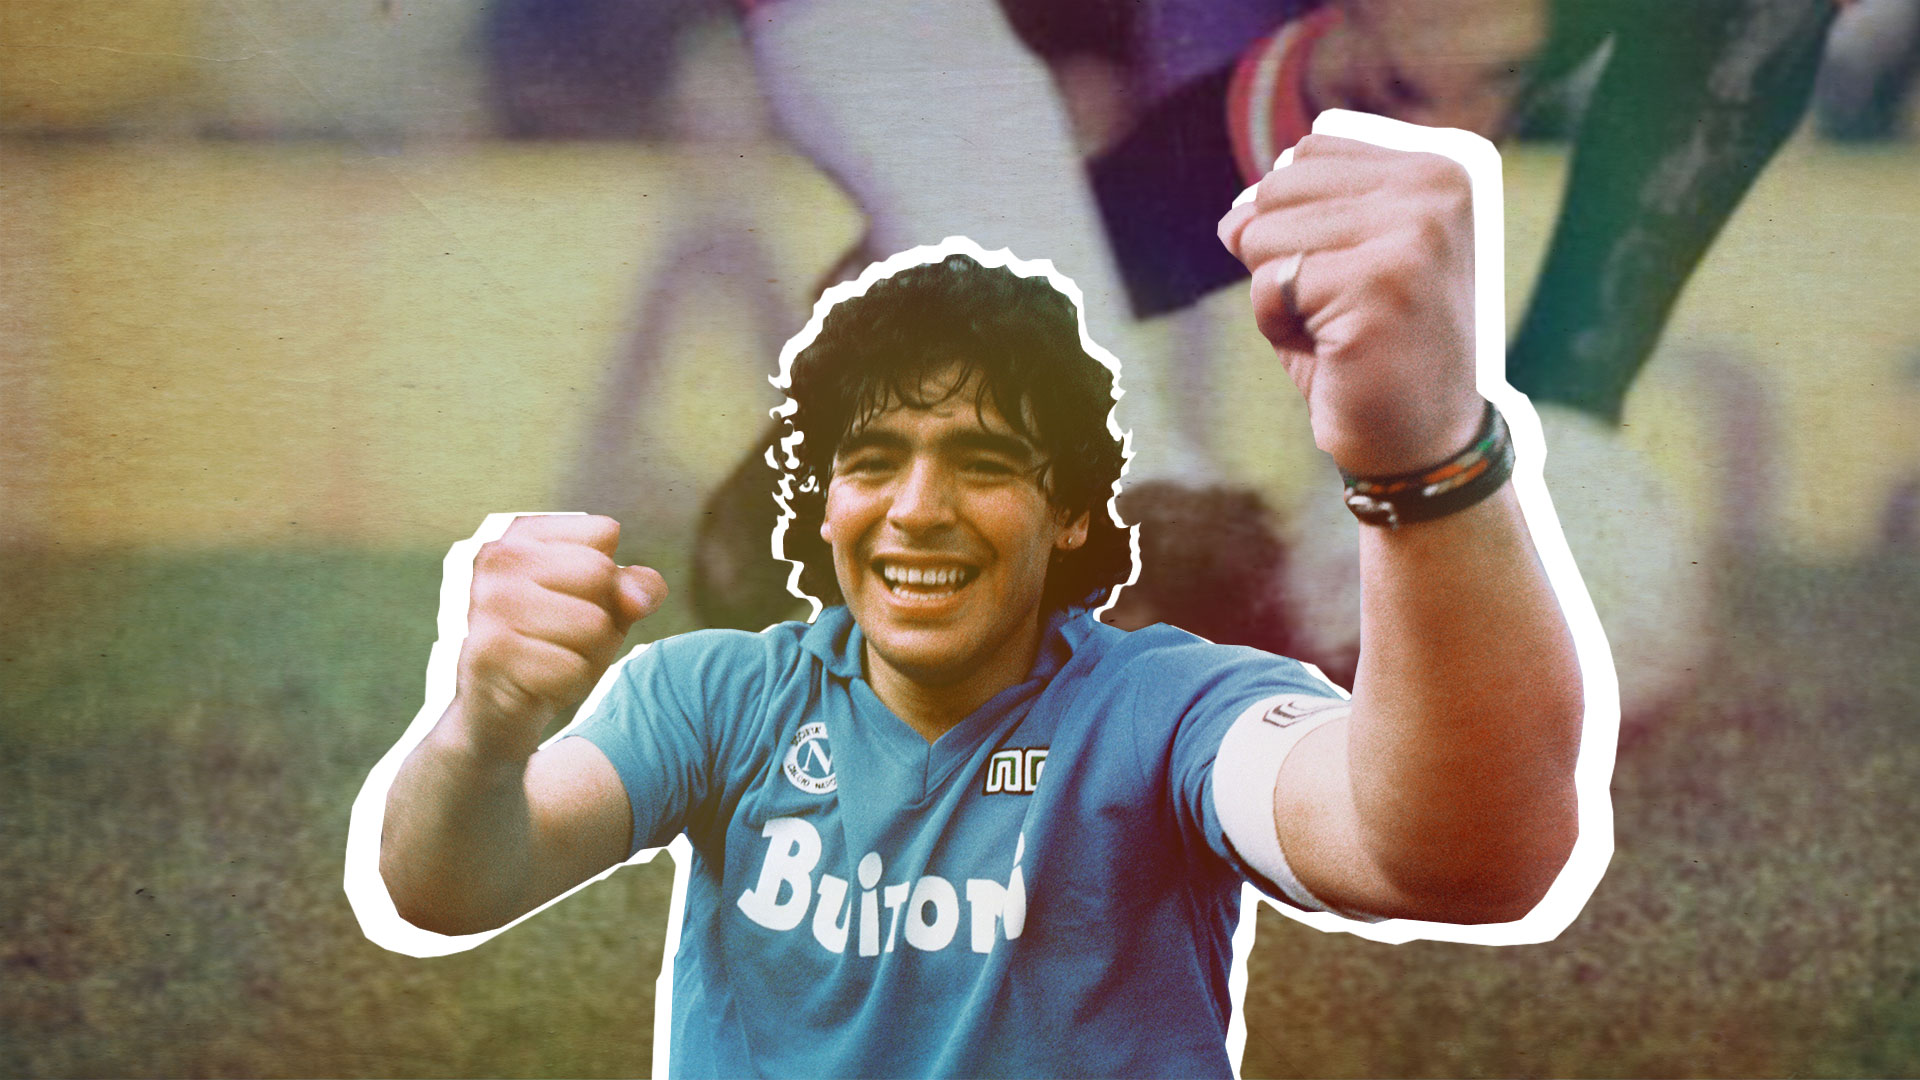 Thumb_Athlitismos_Maradona